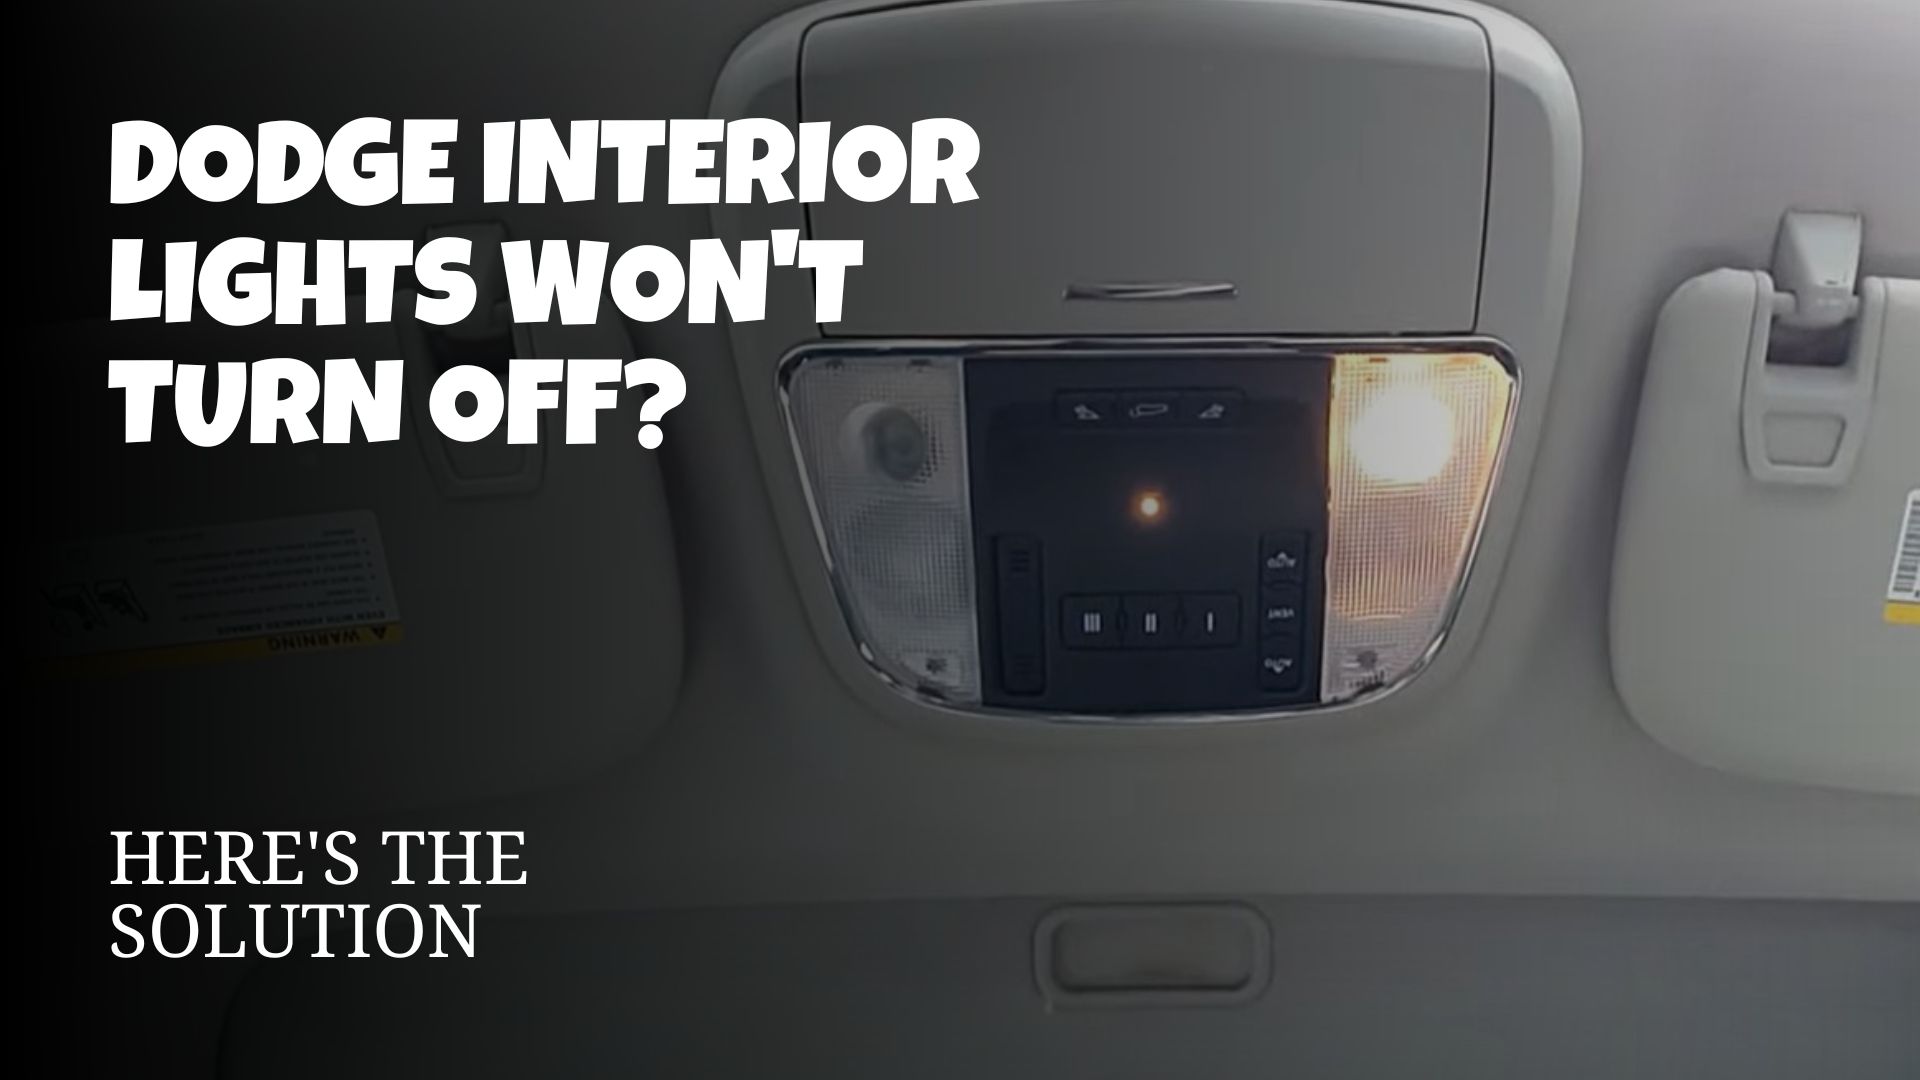 2010 dodge journey interior lights won't turn off